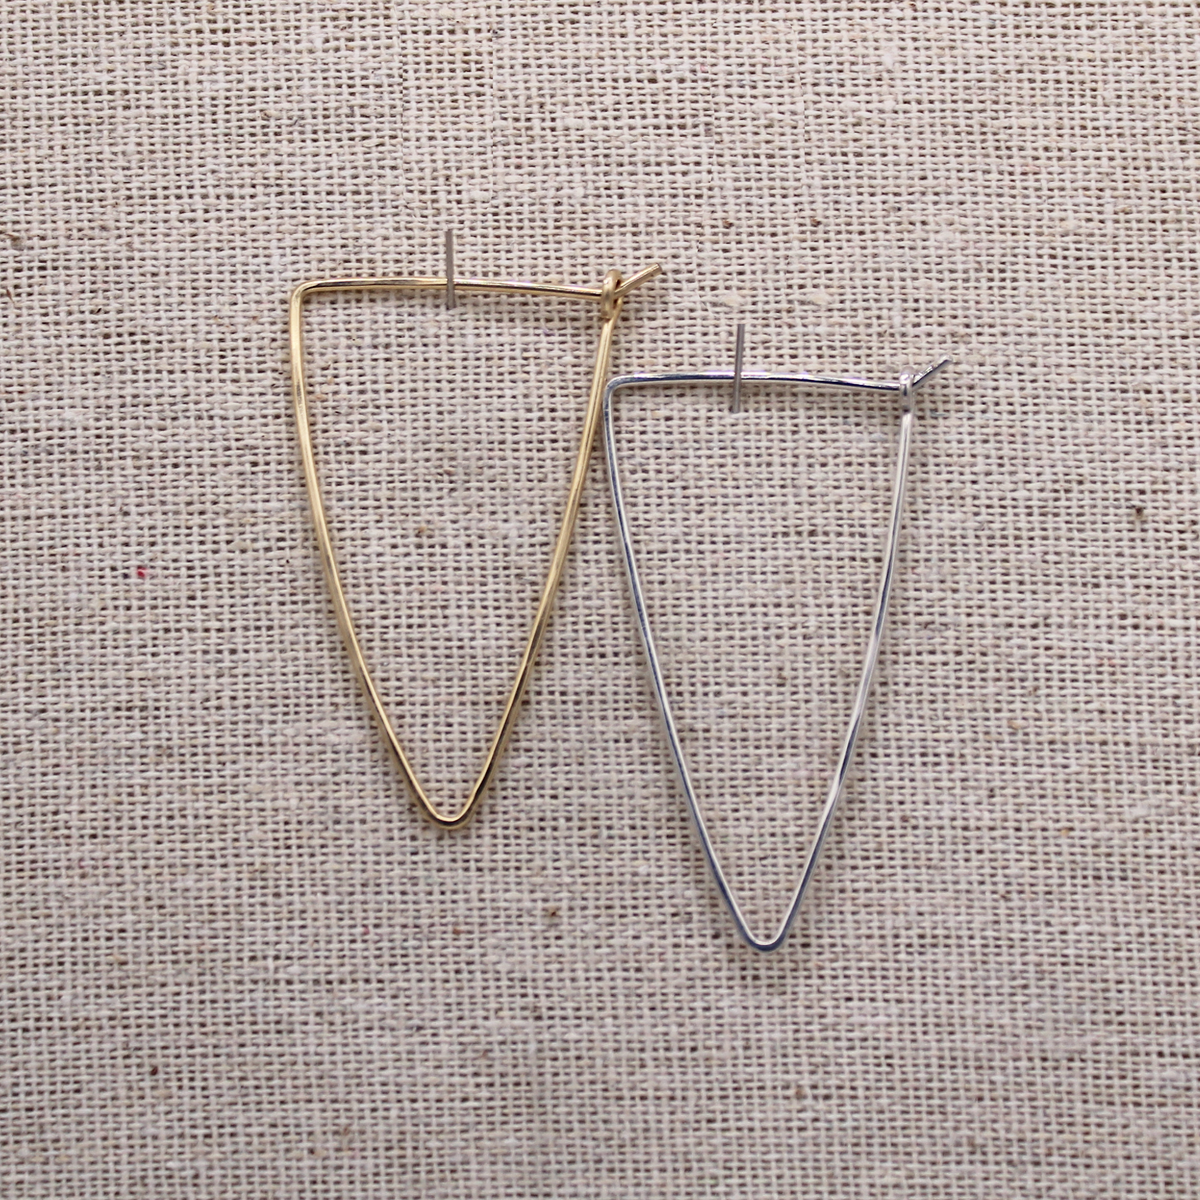 TOFFLO Stainless Steel Jewelry Simple Geometric Metal Half Arc